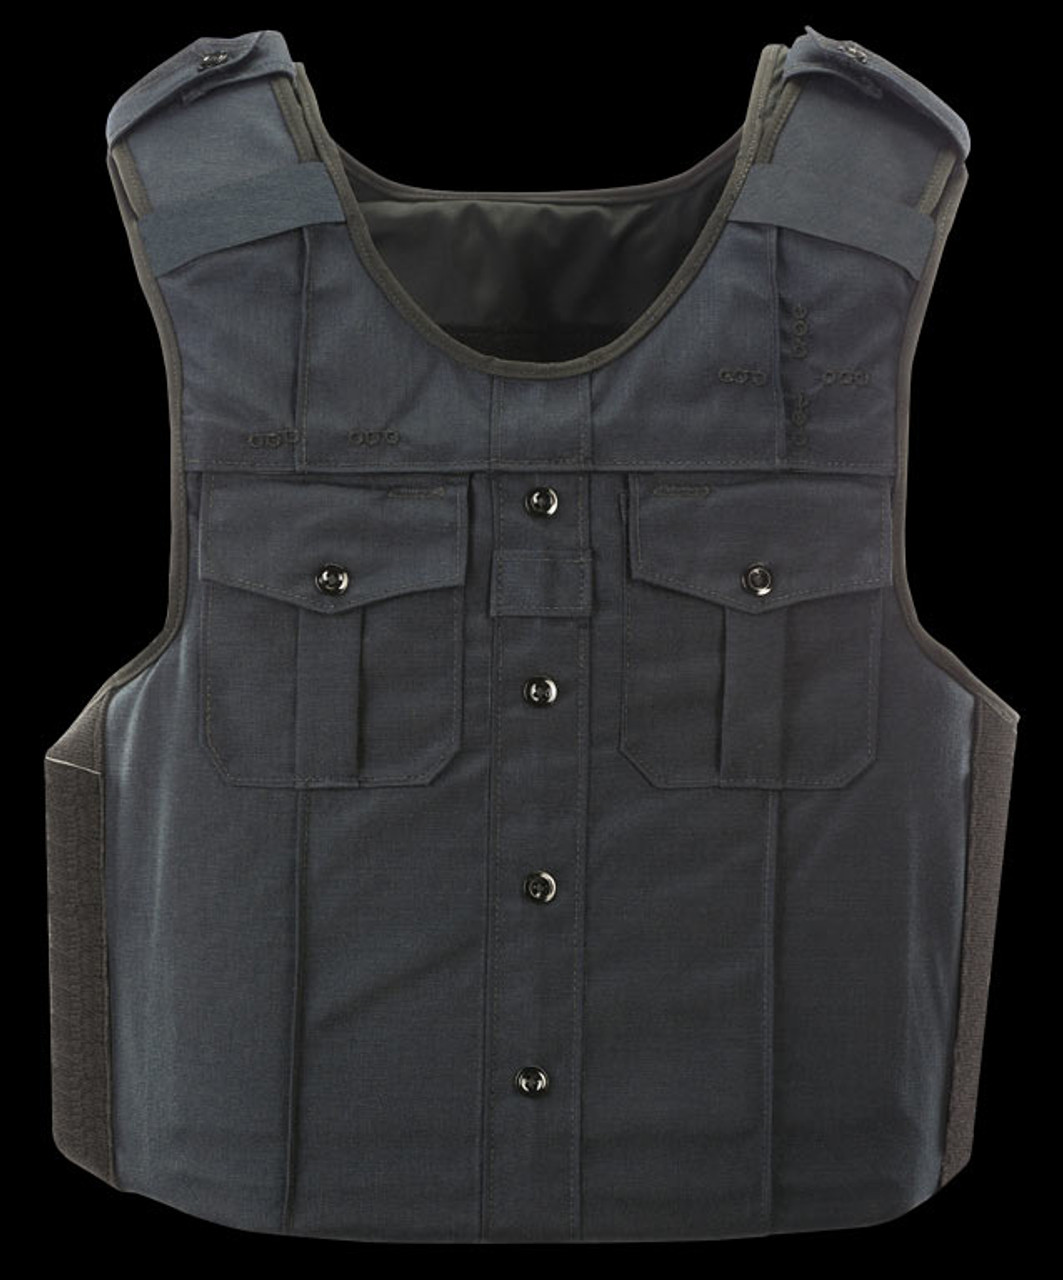 Point Blank Uniform ODC II Ballistic Body Armor Vest, For Military and Police, Available with NIJ .06 Level II, IIA and IIIA Ballistic Systems